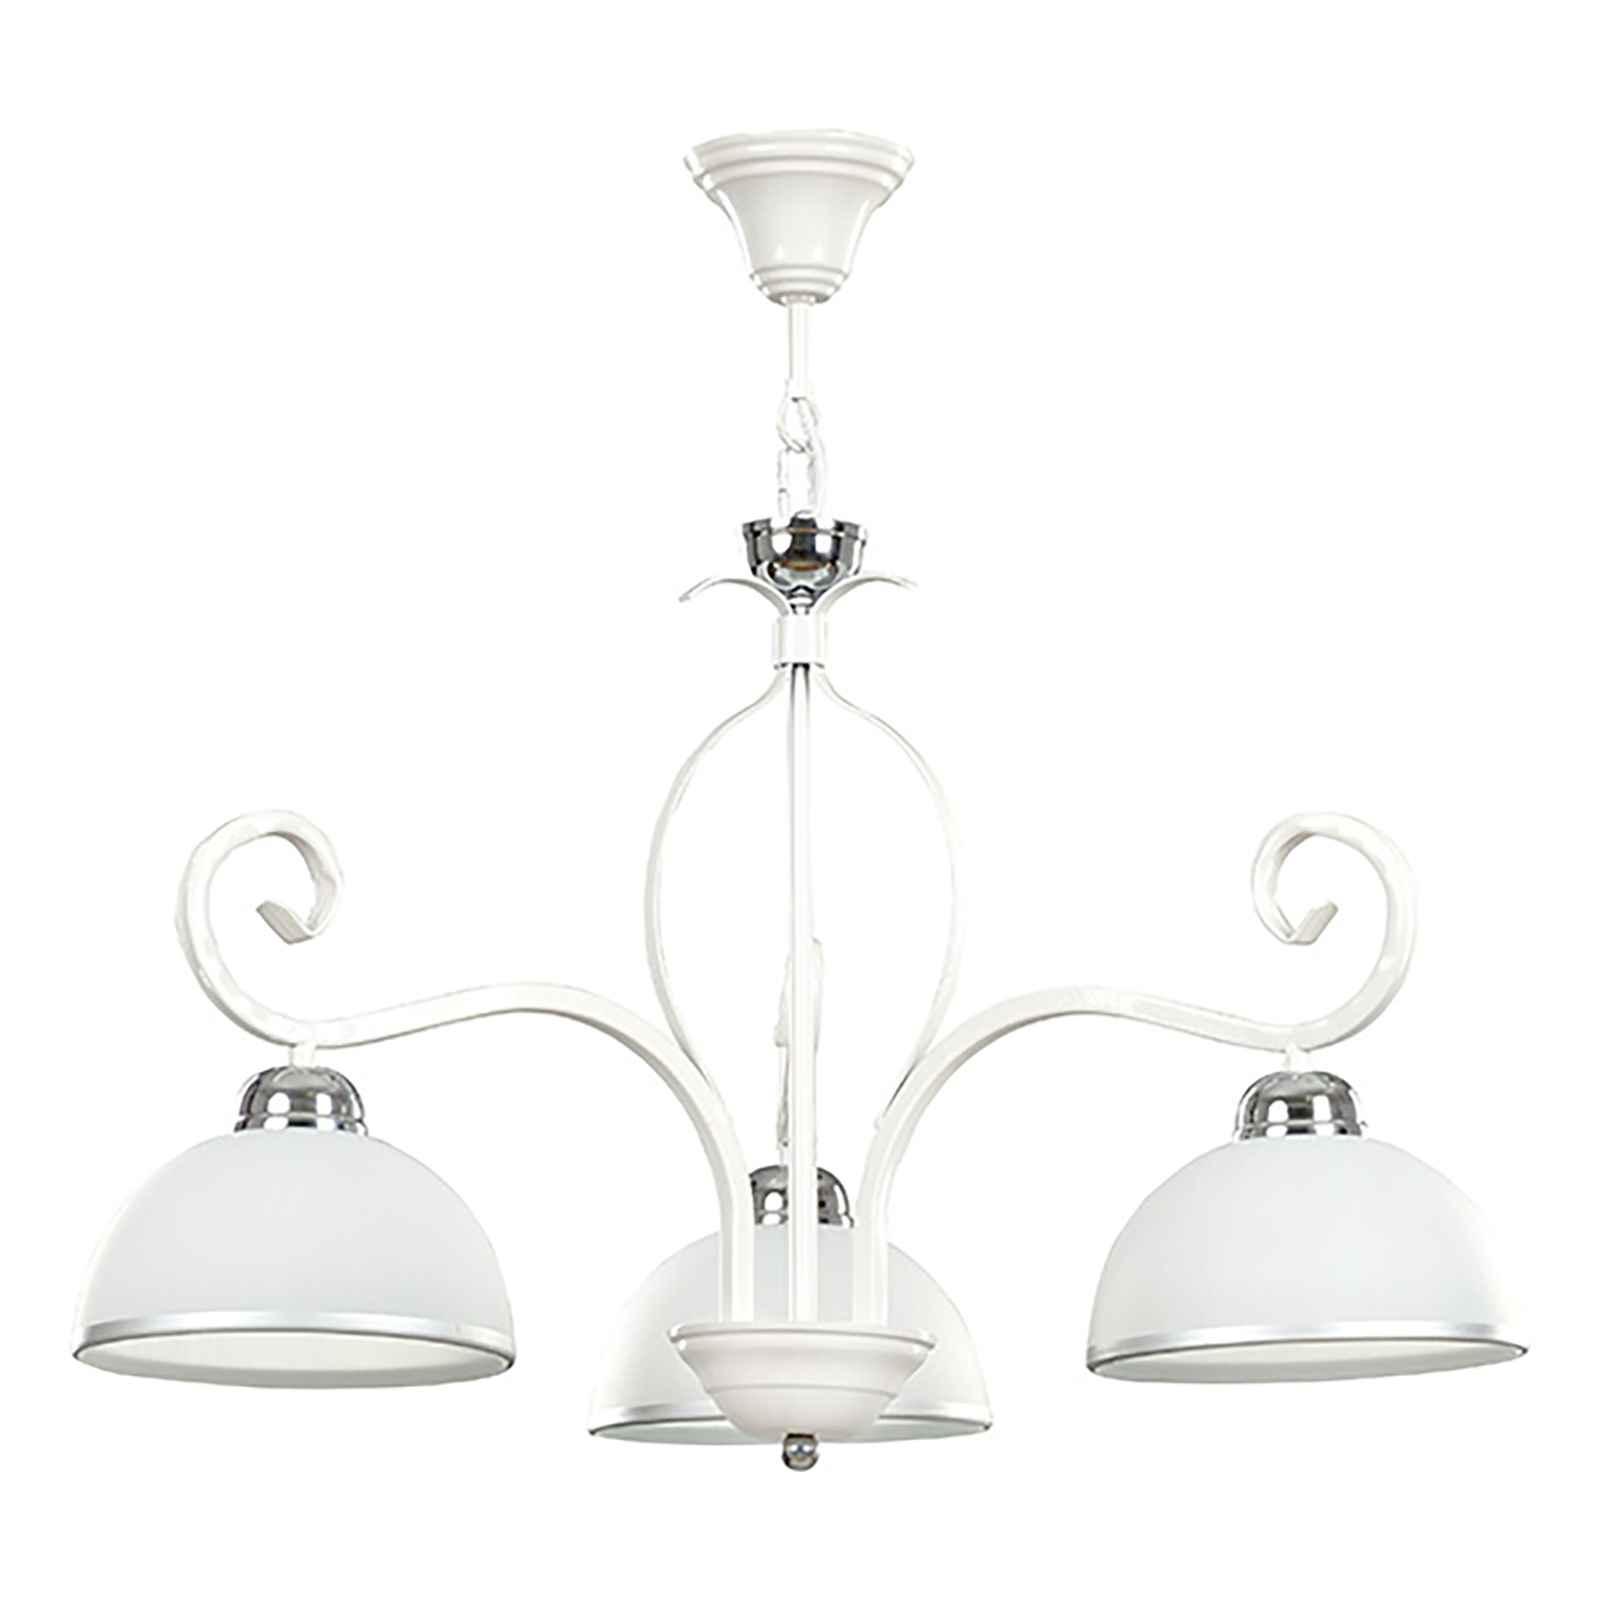 Wivara pendant light, three-bulb, white